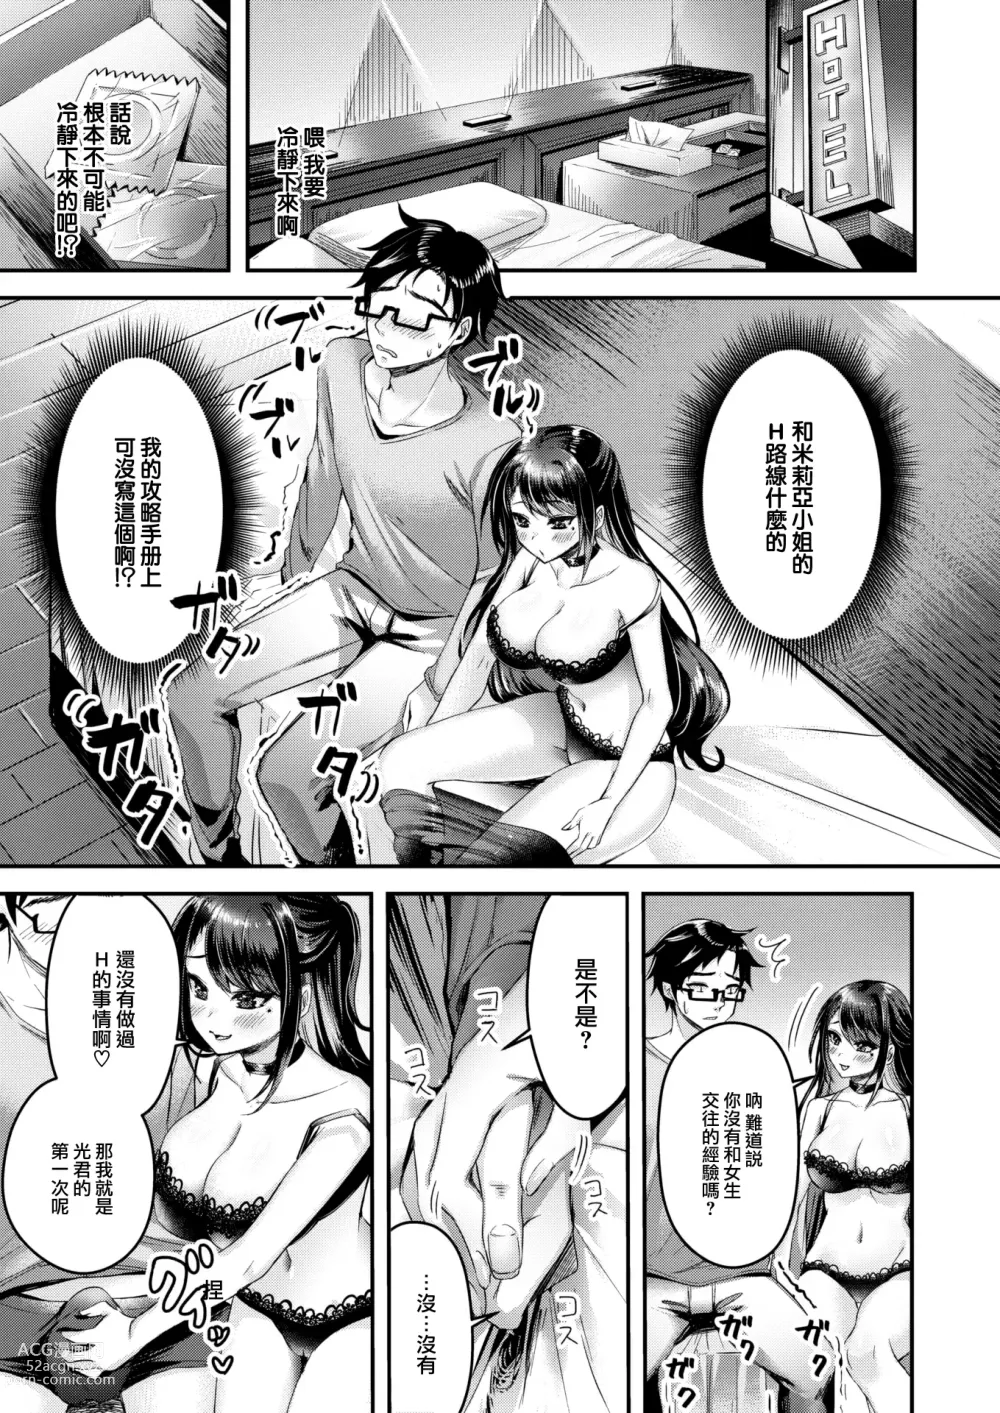 Page 8 of manga Iyasare Gaming Days